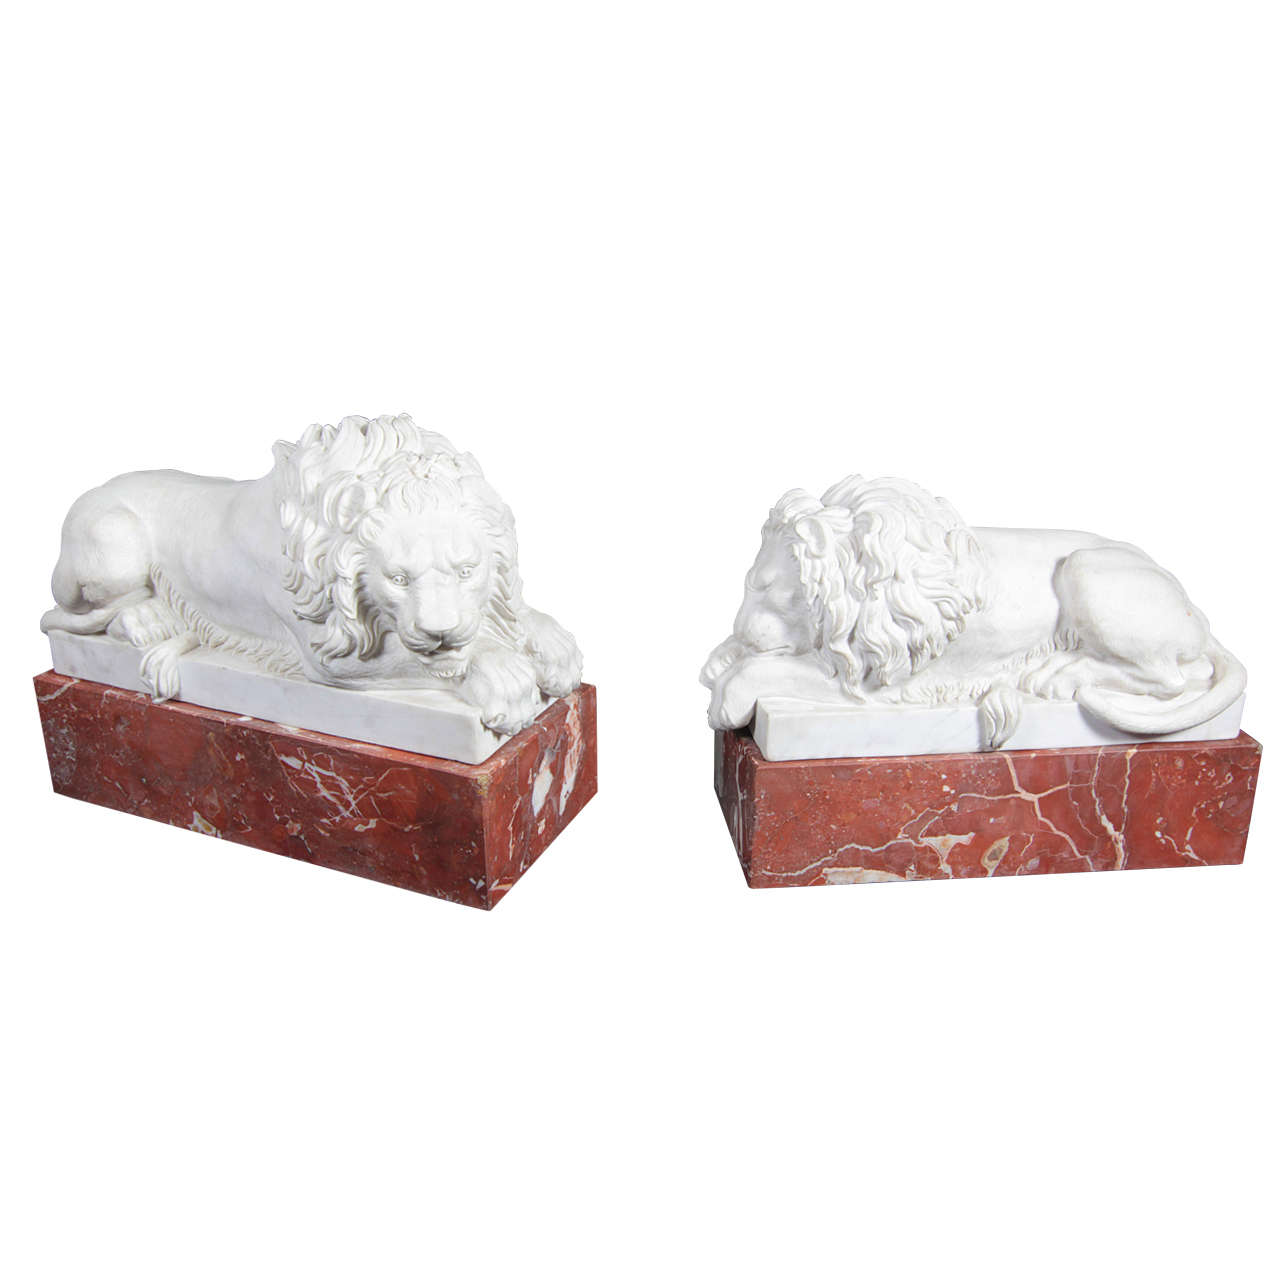 Pair of Reclining Carrara Marble Lions on Jasper Marble Plinths, after Canova